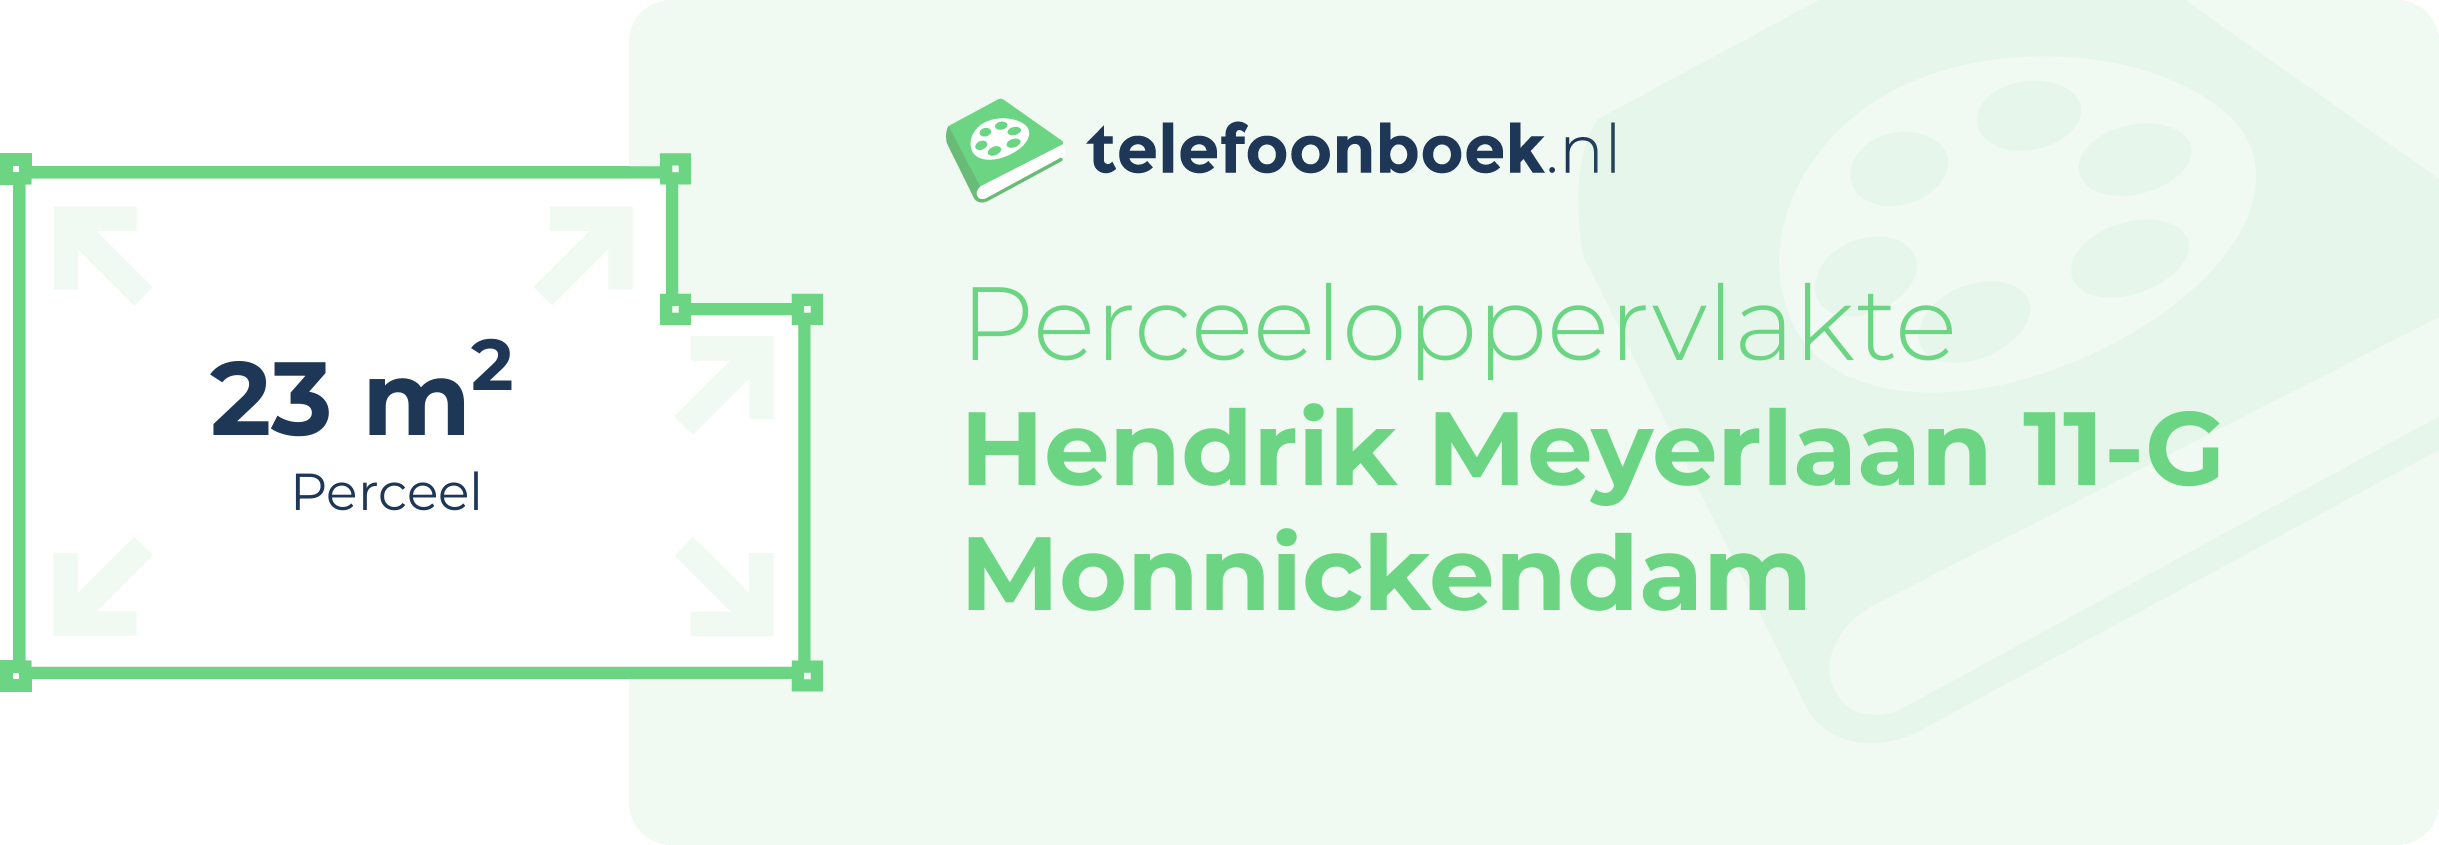 Perceeloppervlakte Hendrik Meyerlaan 11-G Monnickendam